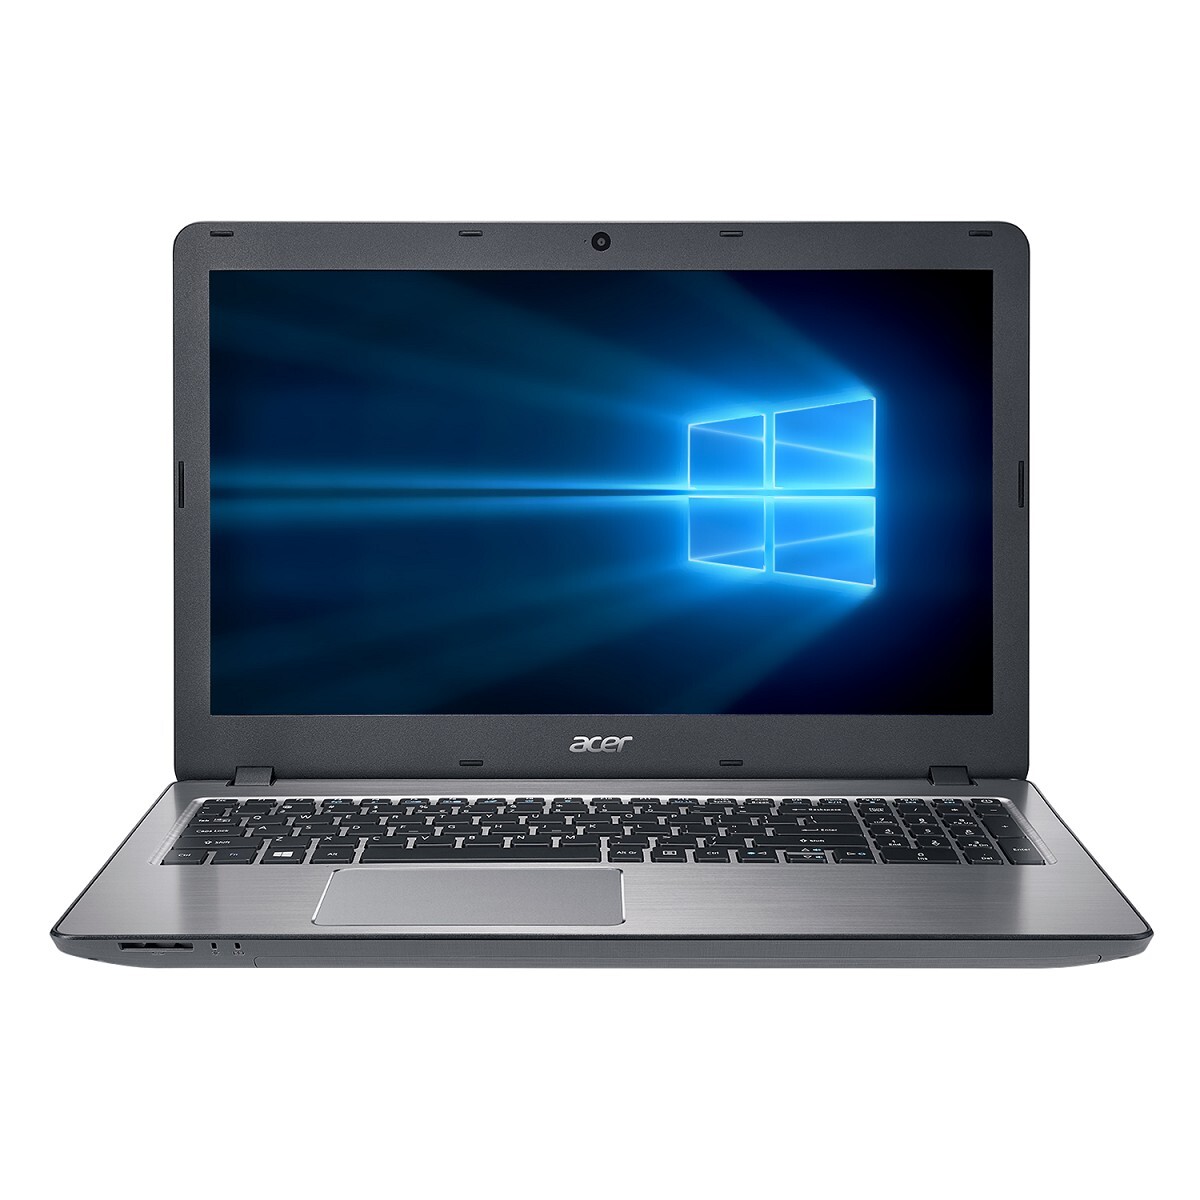 Laptop Acer Aspire F5-573G-36LH - Intel Core i3-7100U, RAM 4GB, HDD 500GB, Intel HD Graphics, 15.6inch